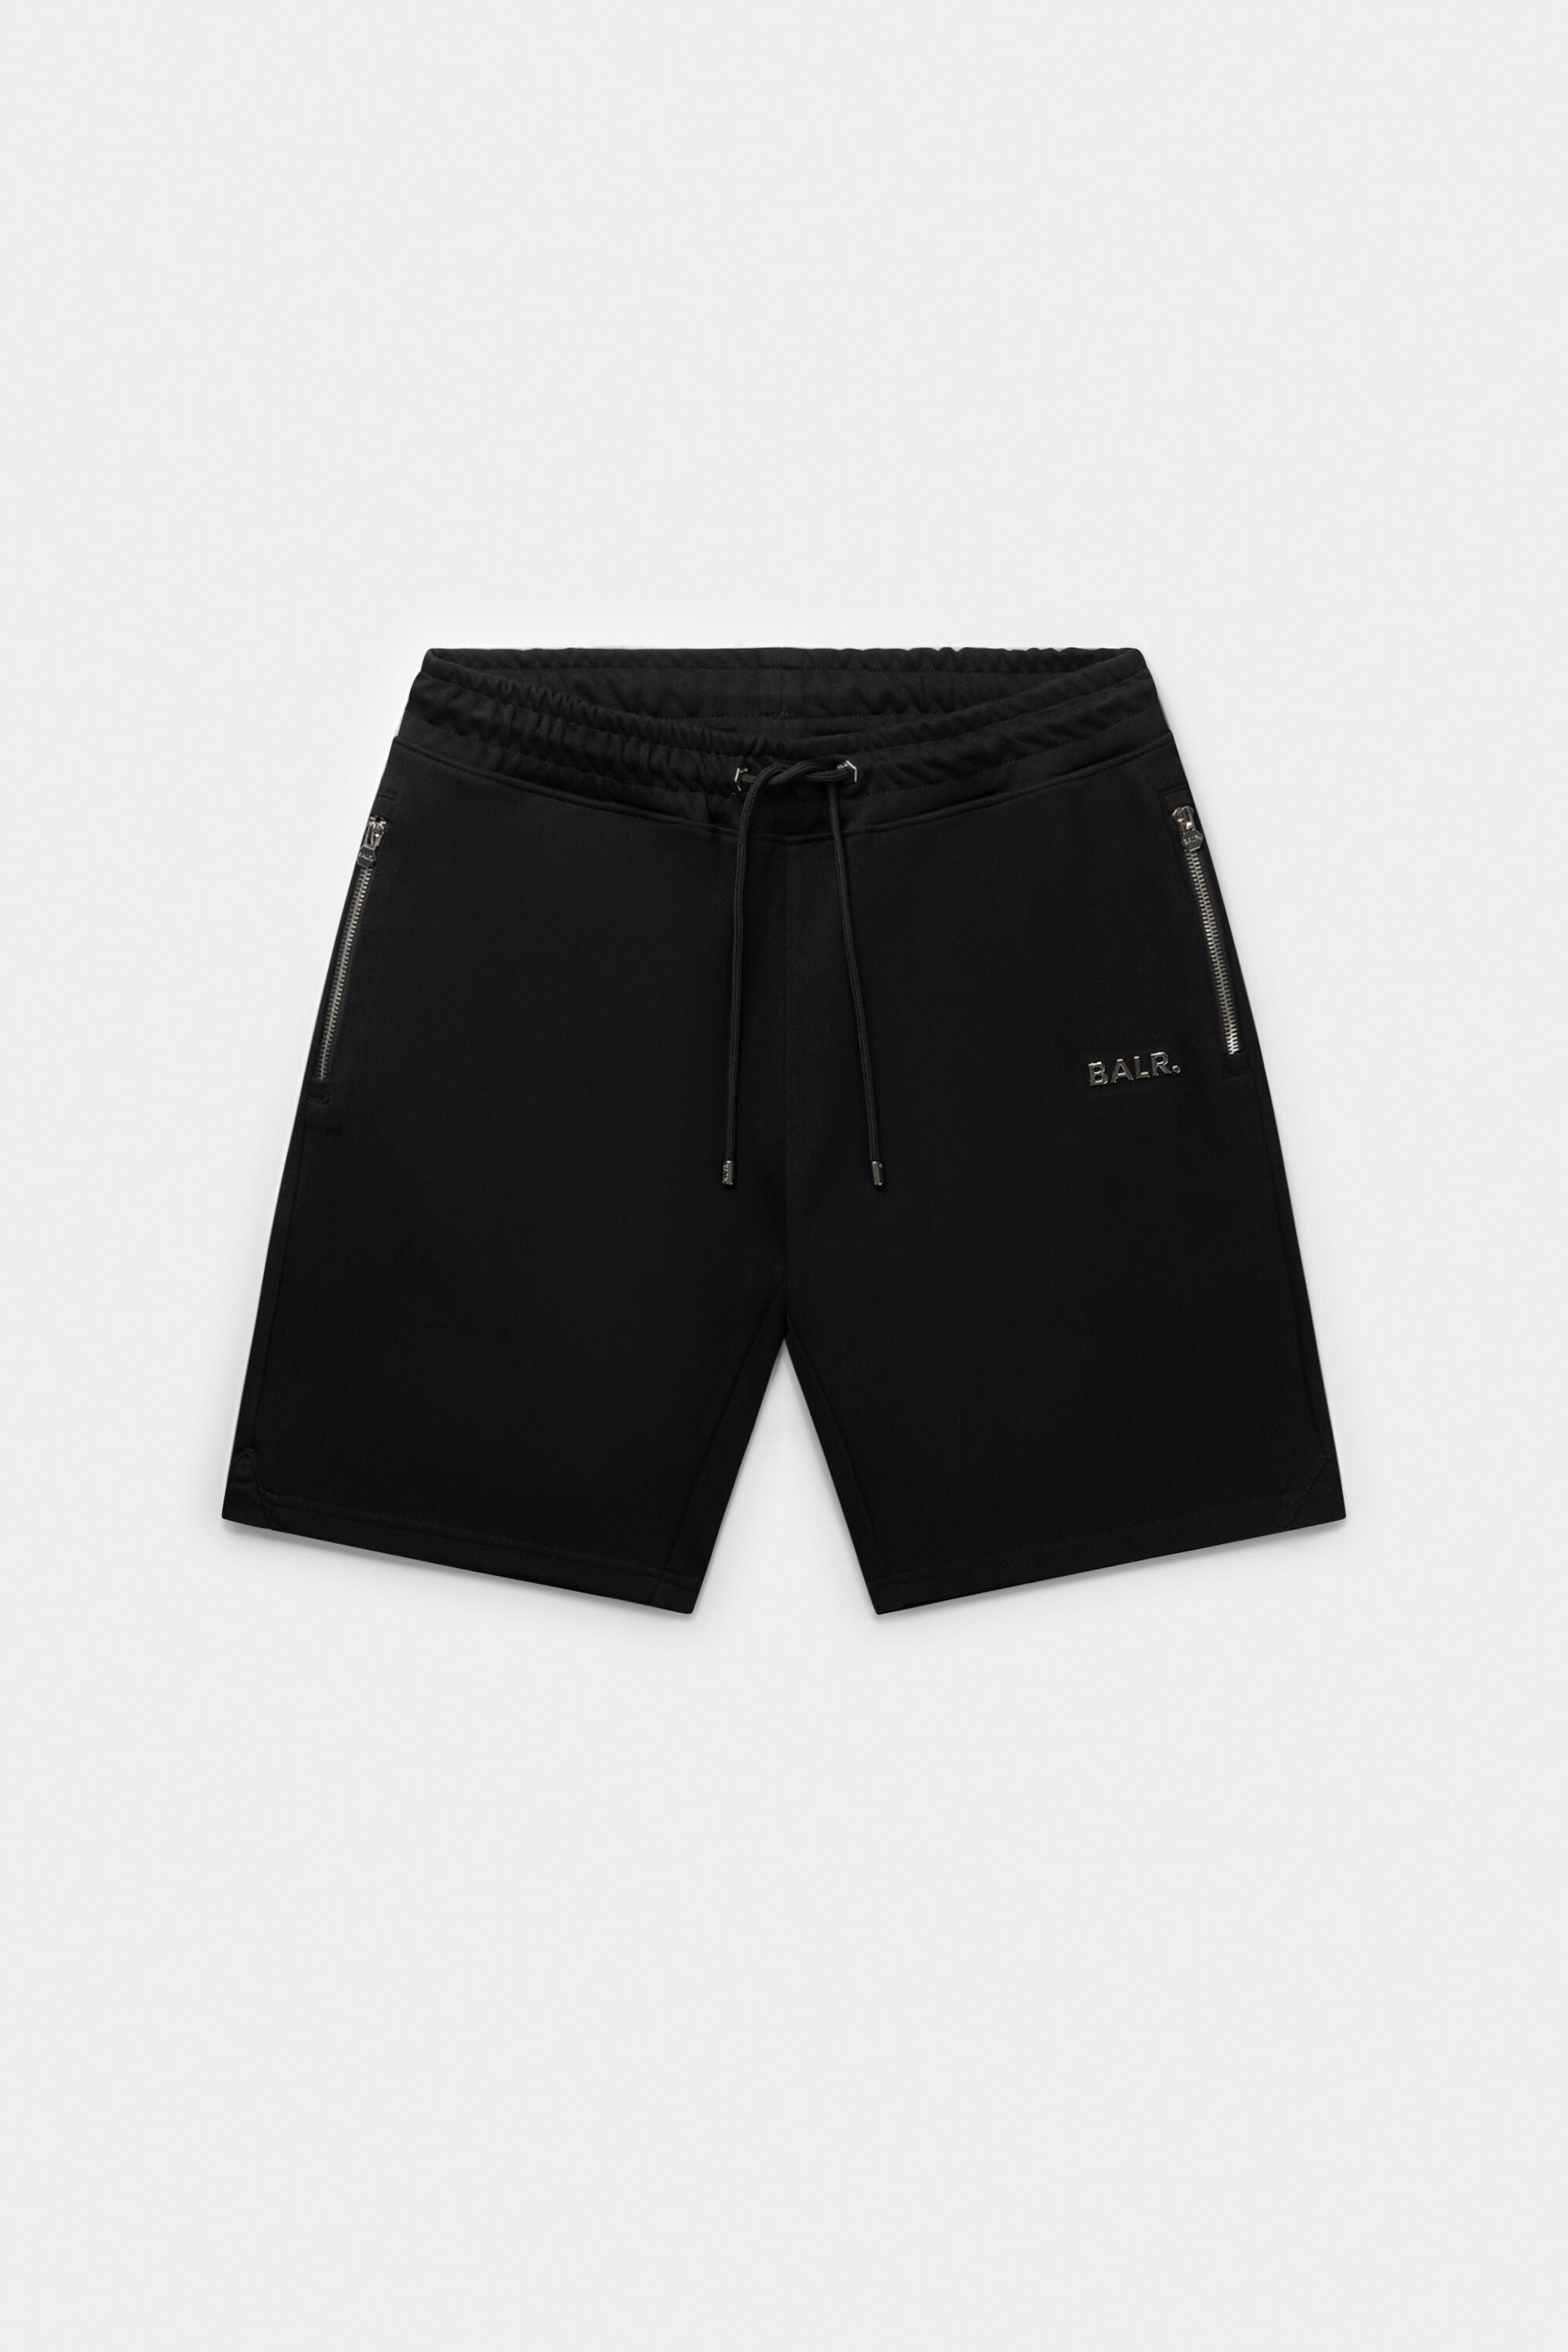 Q-Series Regular Fit Shorts Jet Black